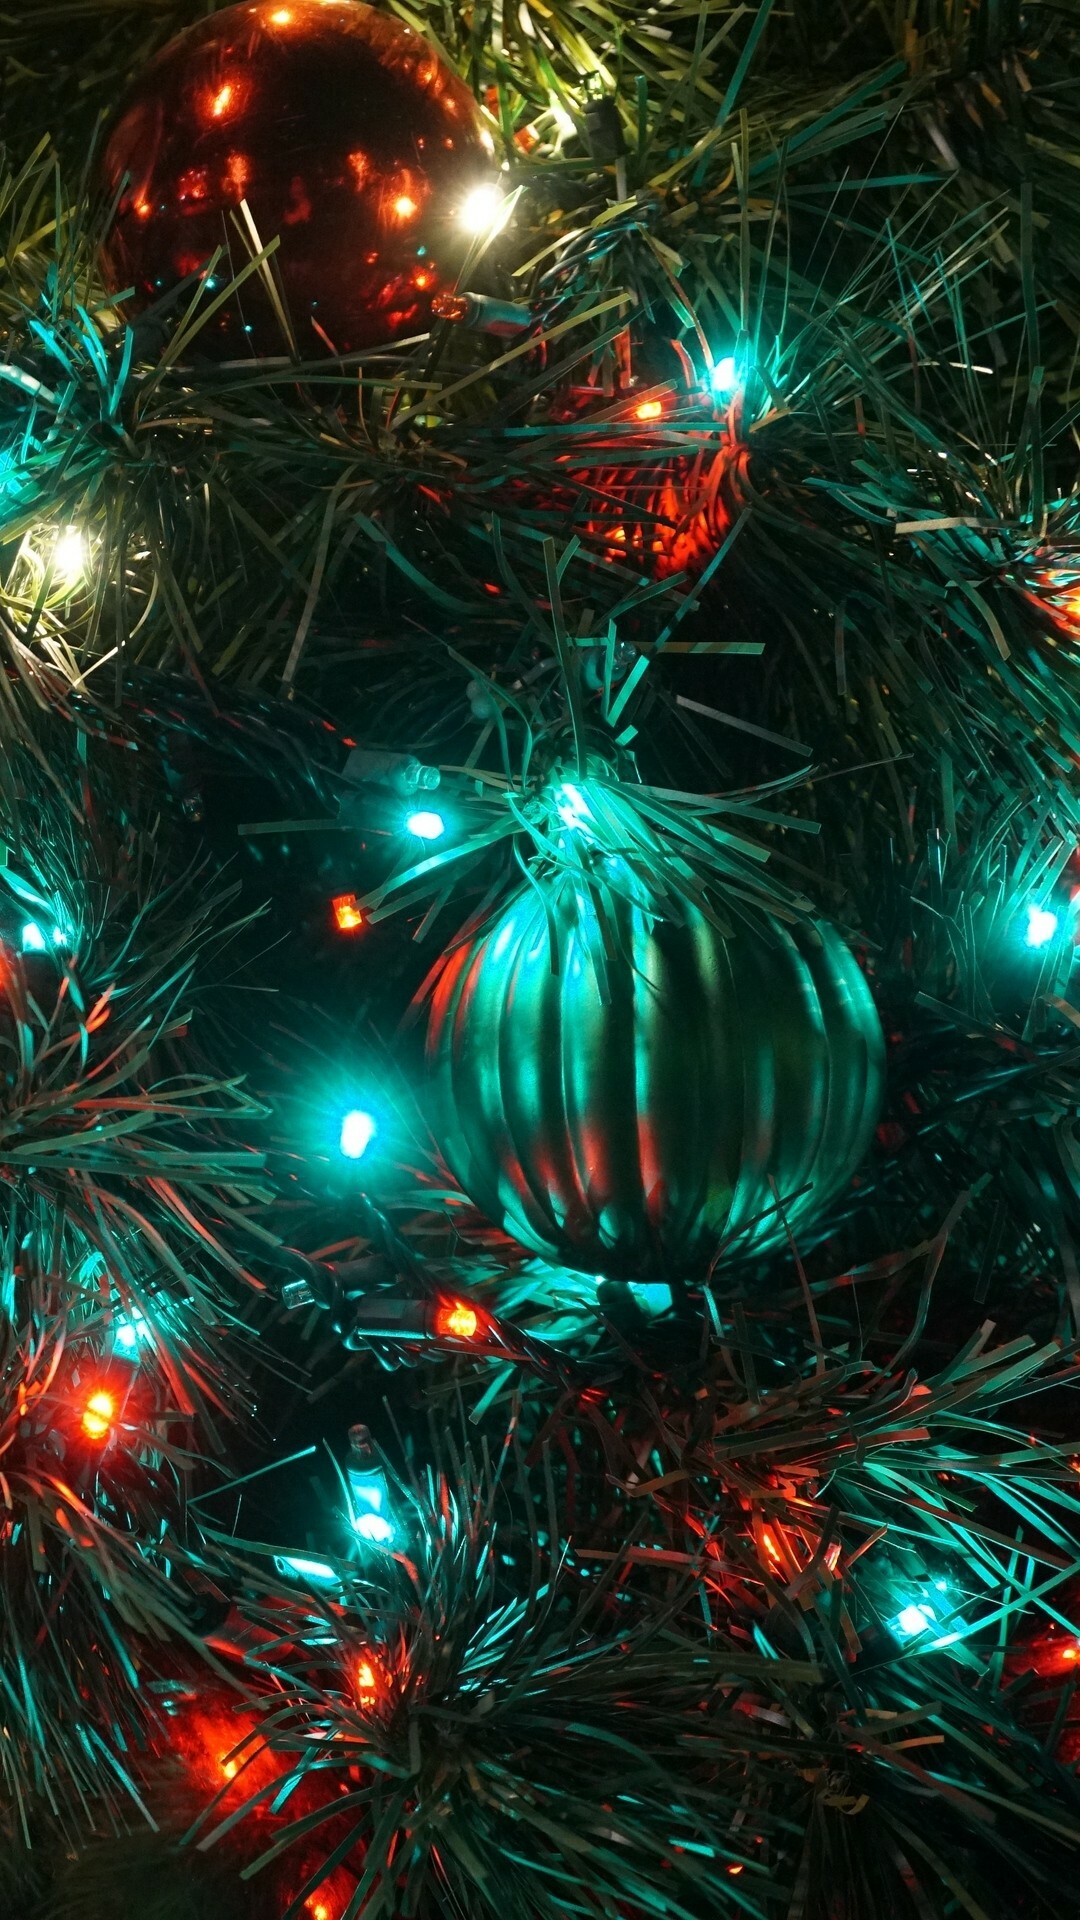 Fairy Lights: The Christmas illumination, Decoration, Celebration. 1080x1920 Full HD Background.